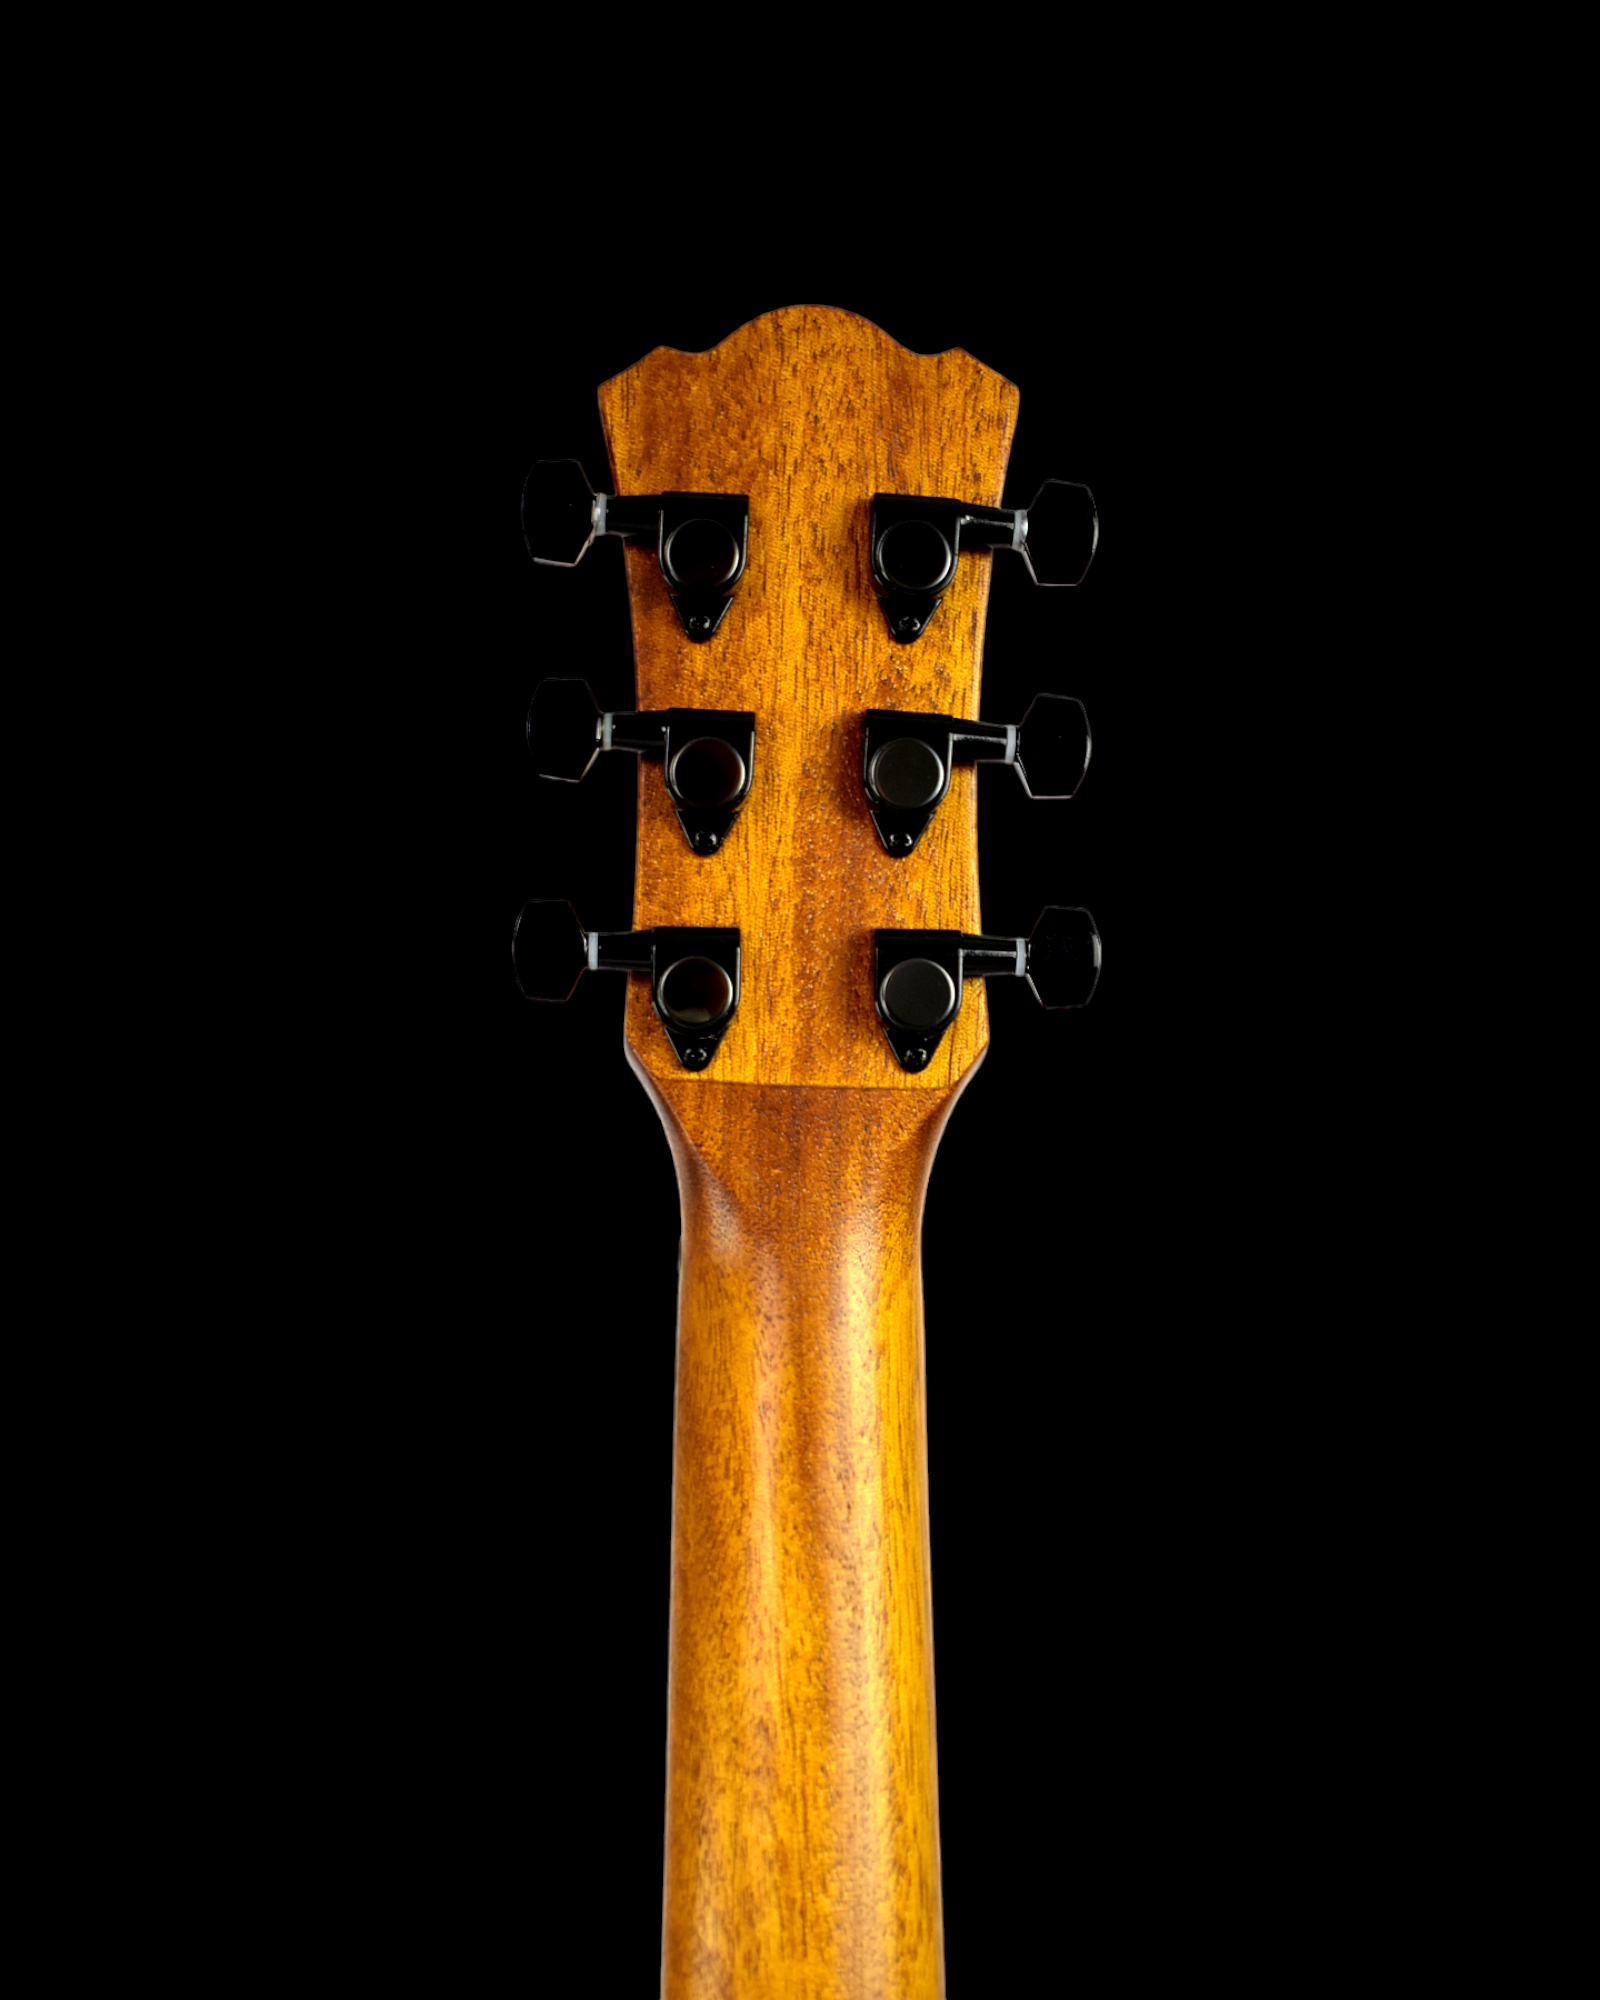 Caraya Safair 41 All Mahogany Dreadnought Acoustic Guitar,Built-in EQ+Gig  Bag Safair 41”EQ